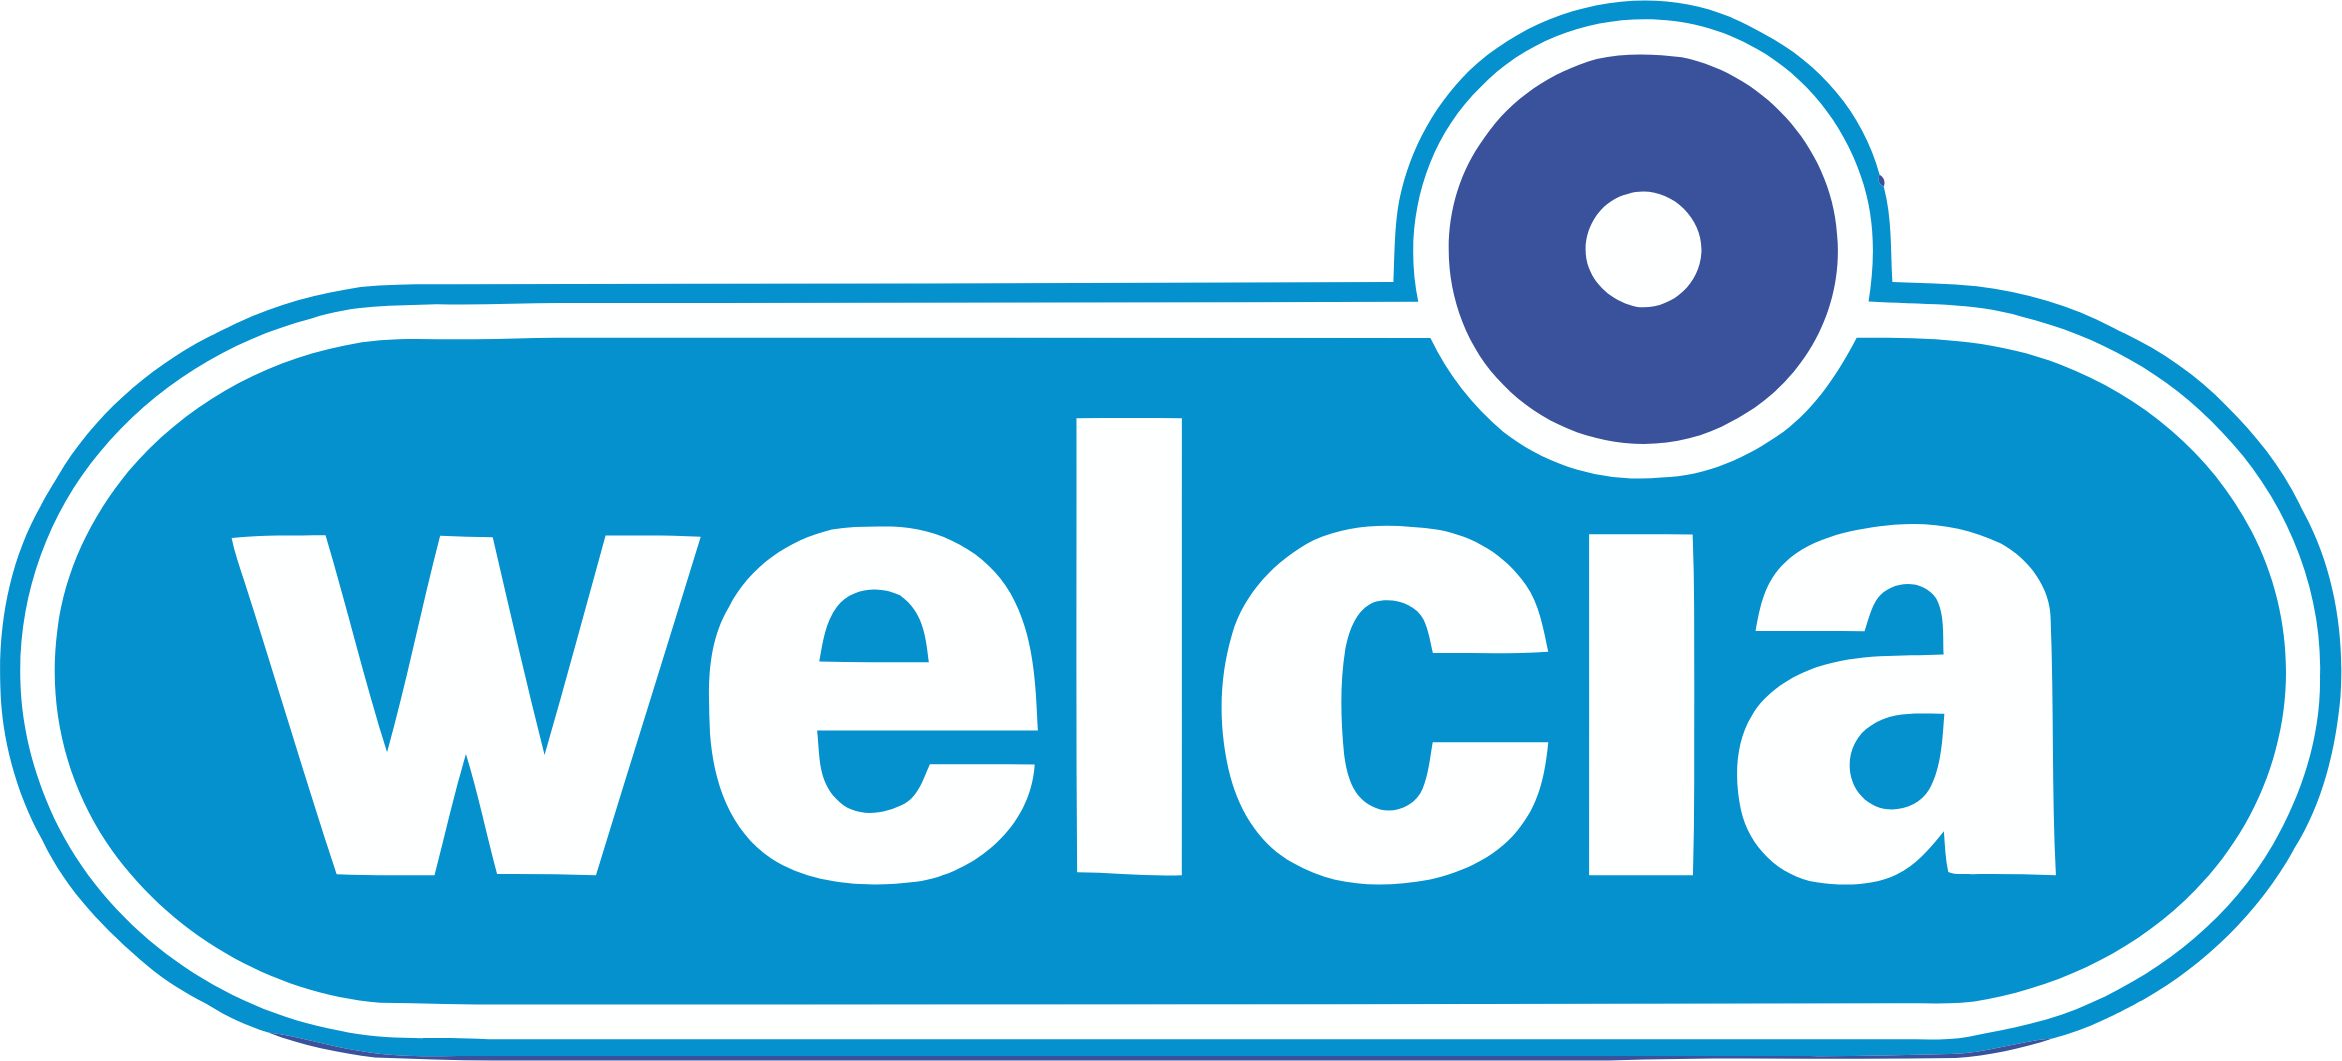 Welcia Holdings logo (transparent PNG)